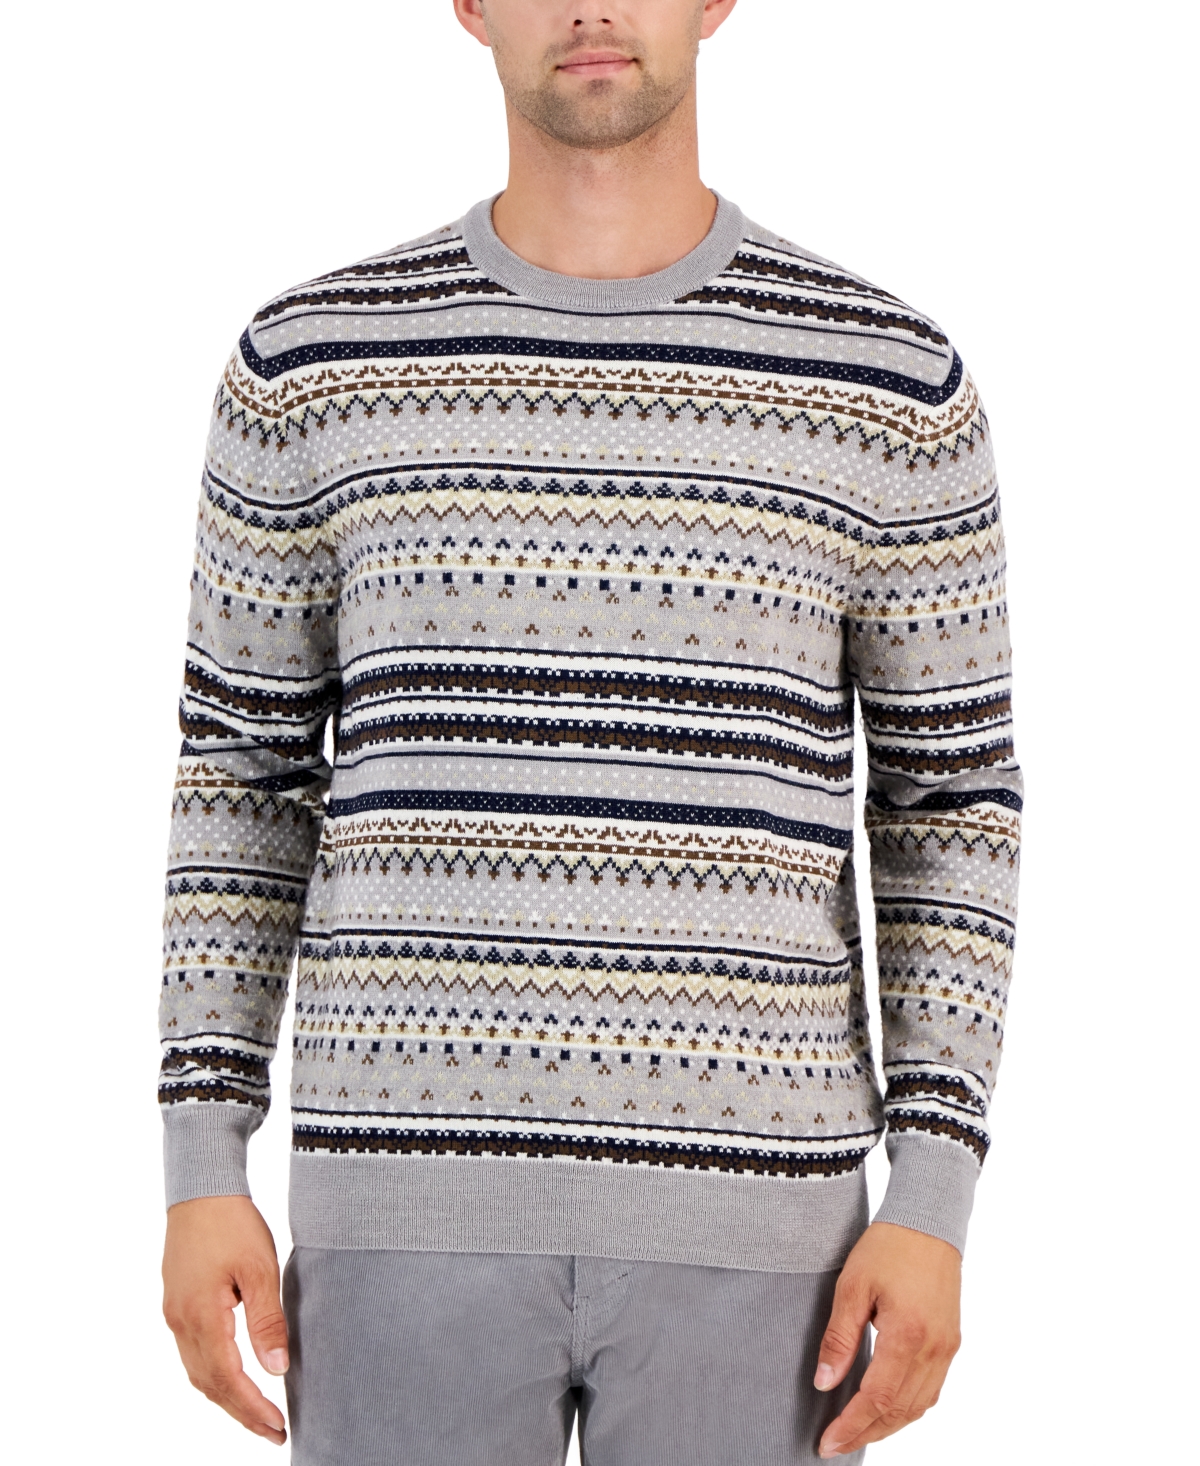 Men's Merino Dale Fair Isle Sweater, Created for Macy's - Shade Slate